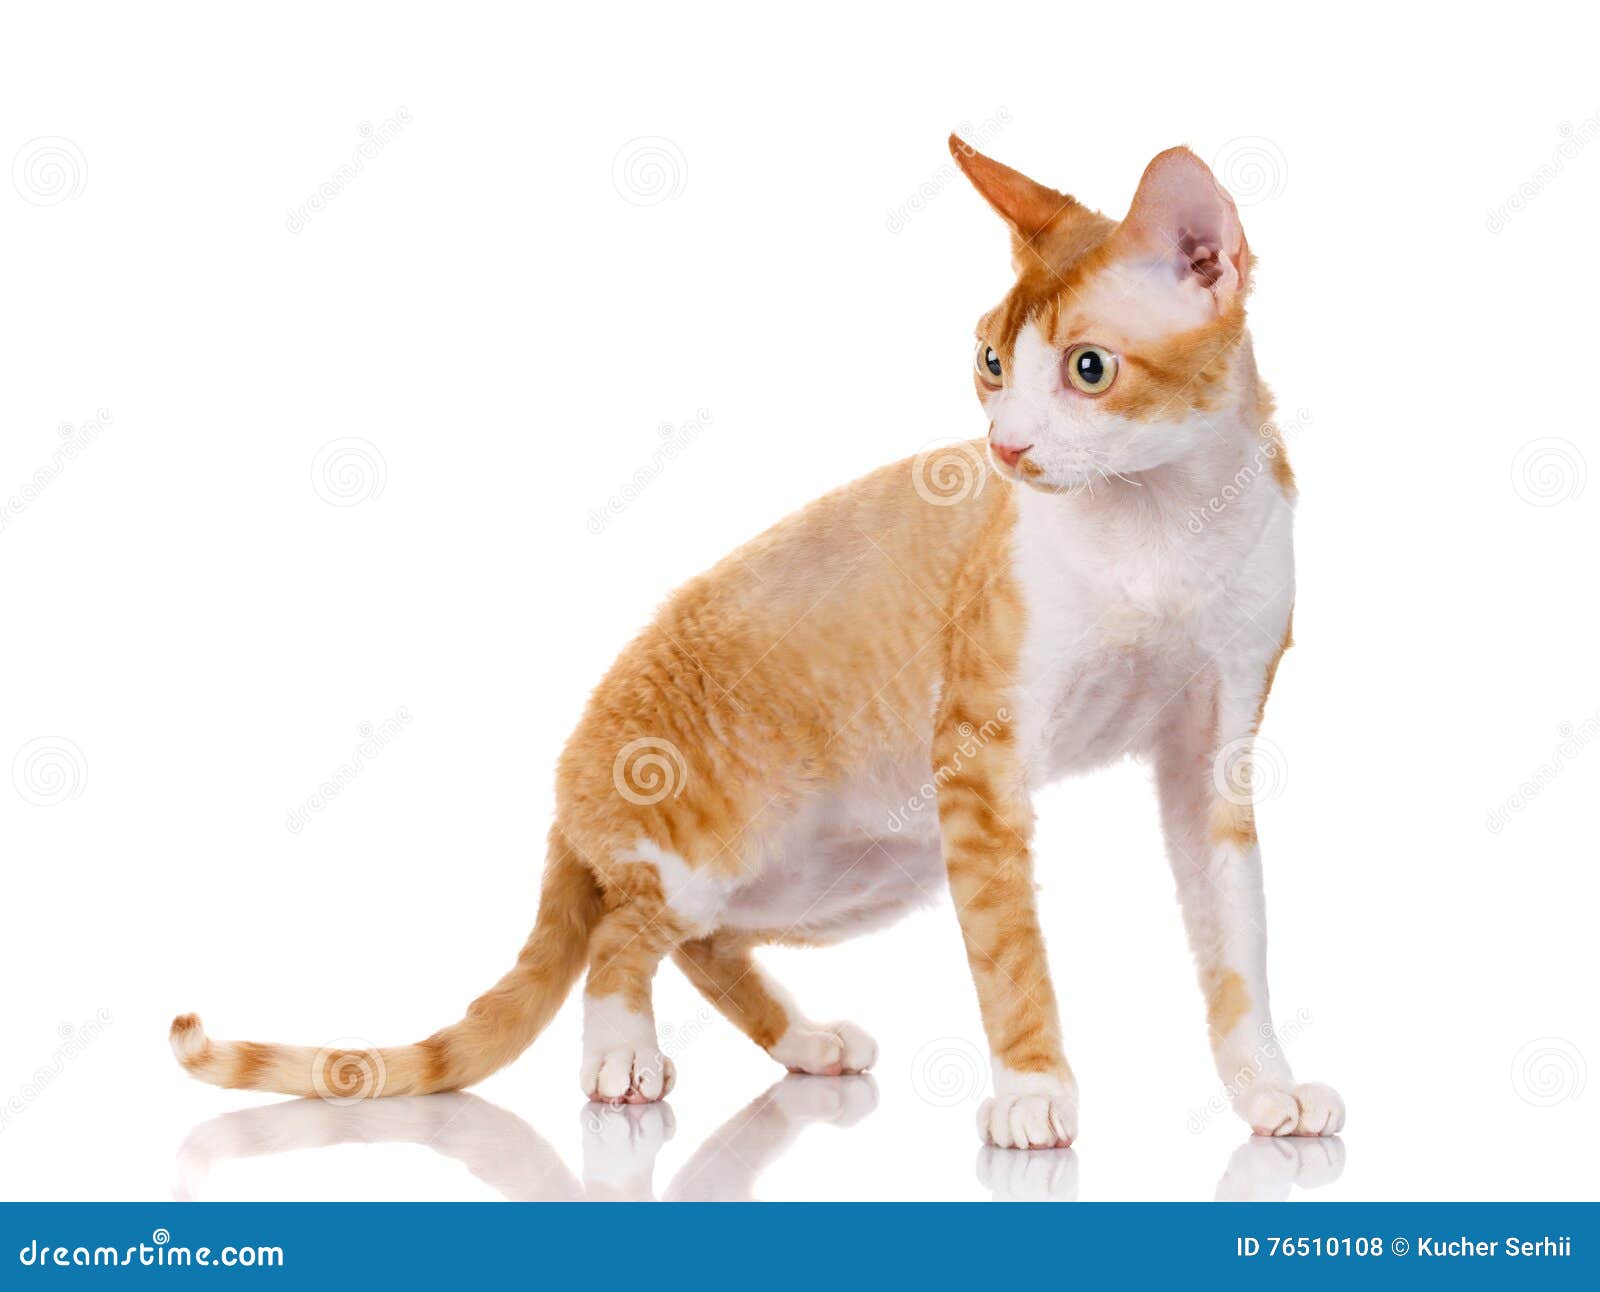  Orange Devon Rex  Cat With Big Ears Looking Aside On White 